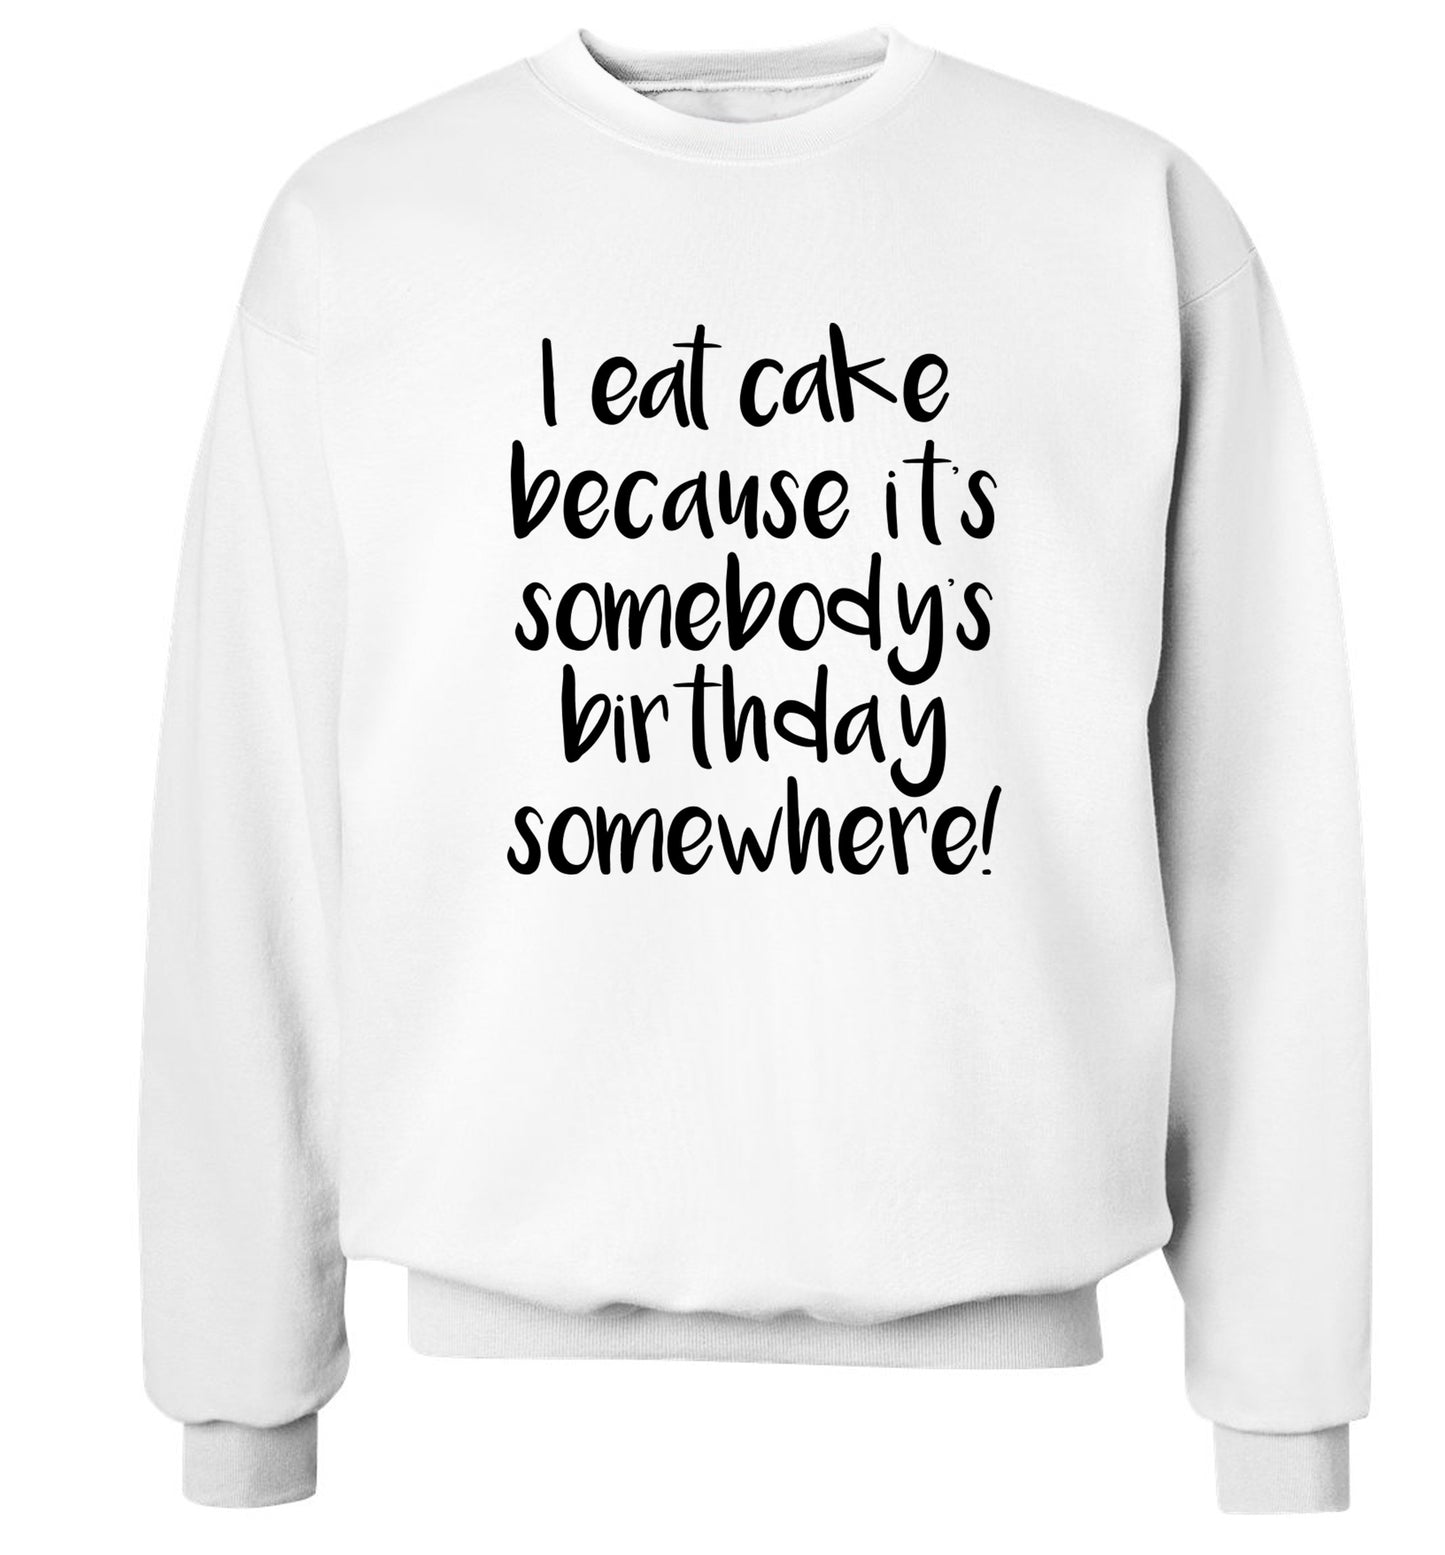 I eat cake because it's somebody's birthday somewhere! Adult's unisex white Sweater 2XL